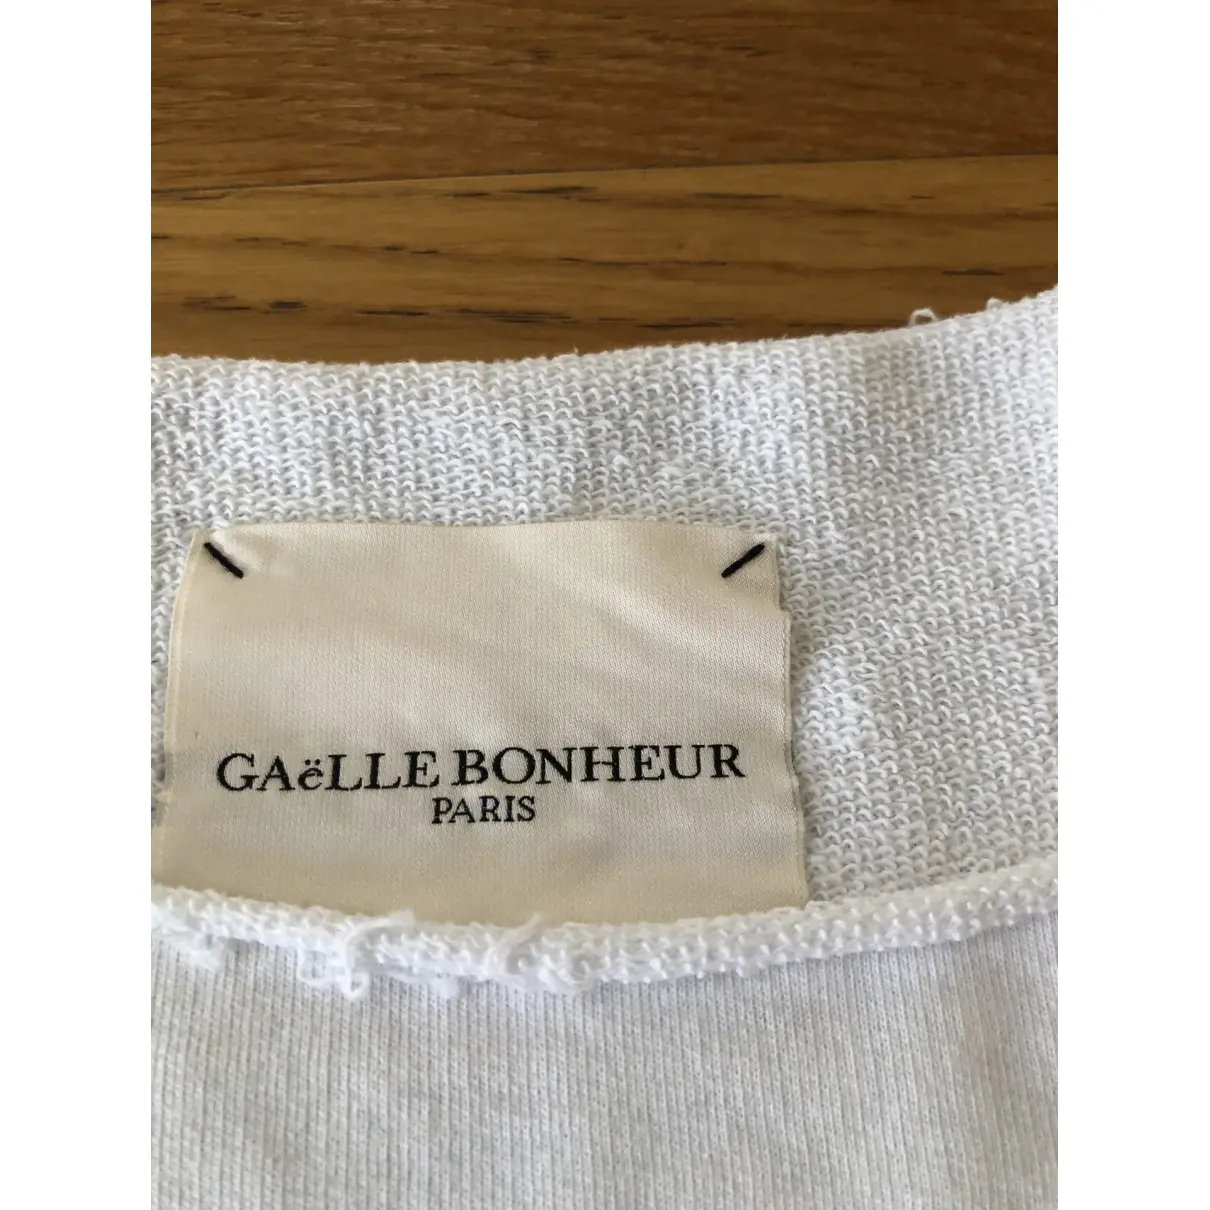 Buy Gaelle Bonheur Sweatshirt online